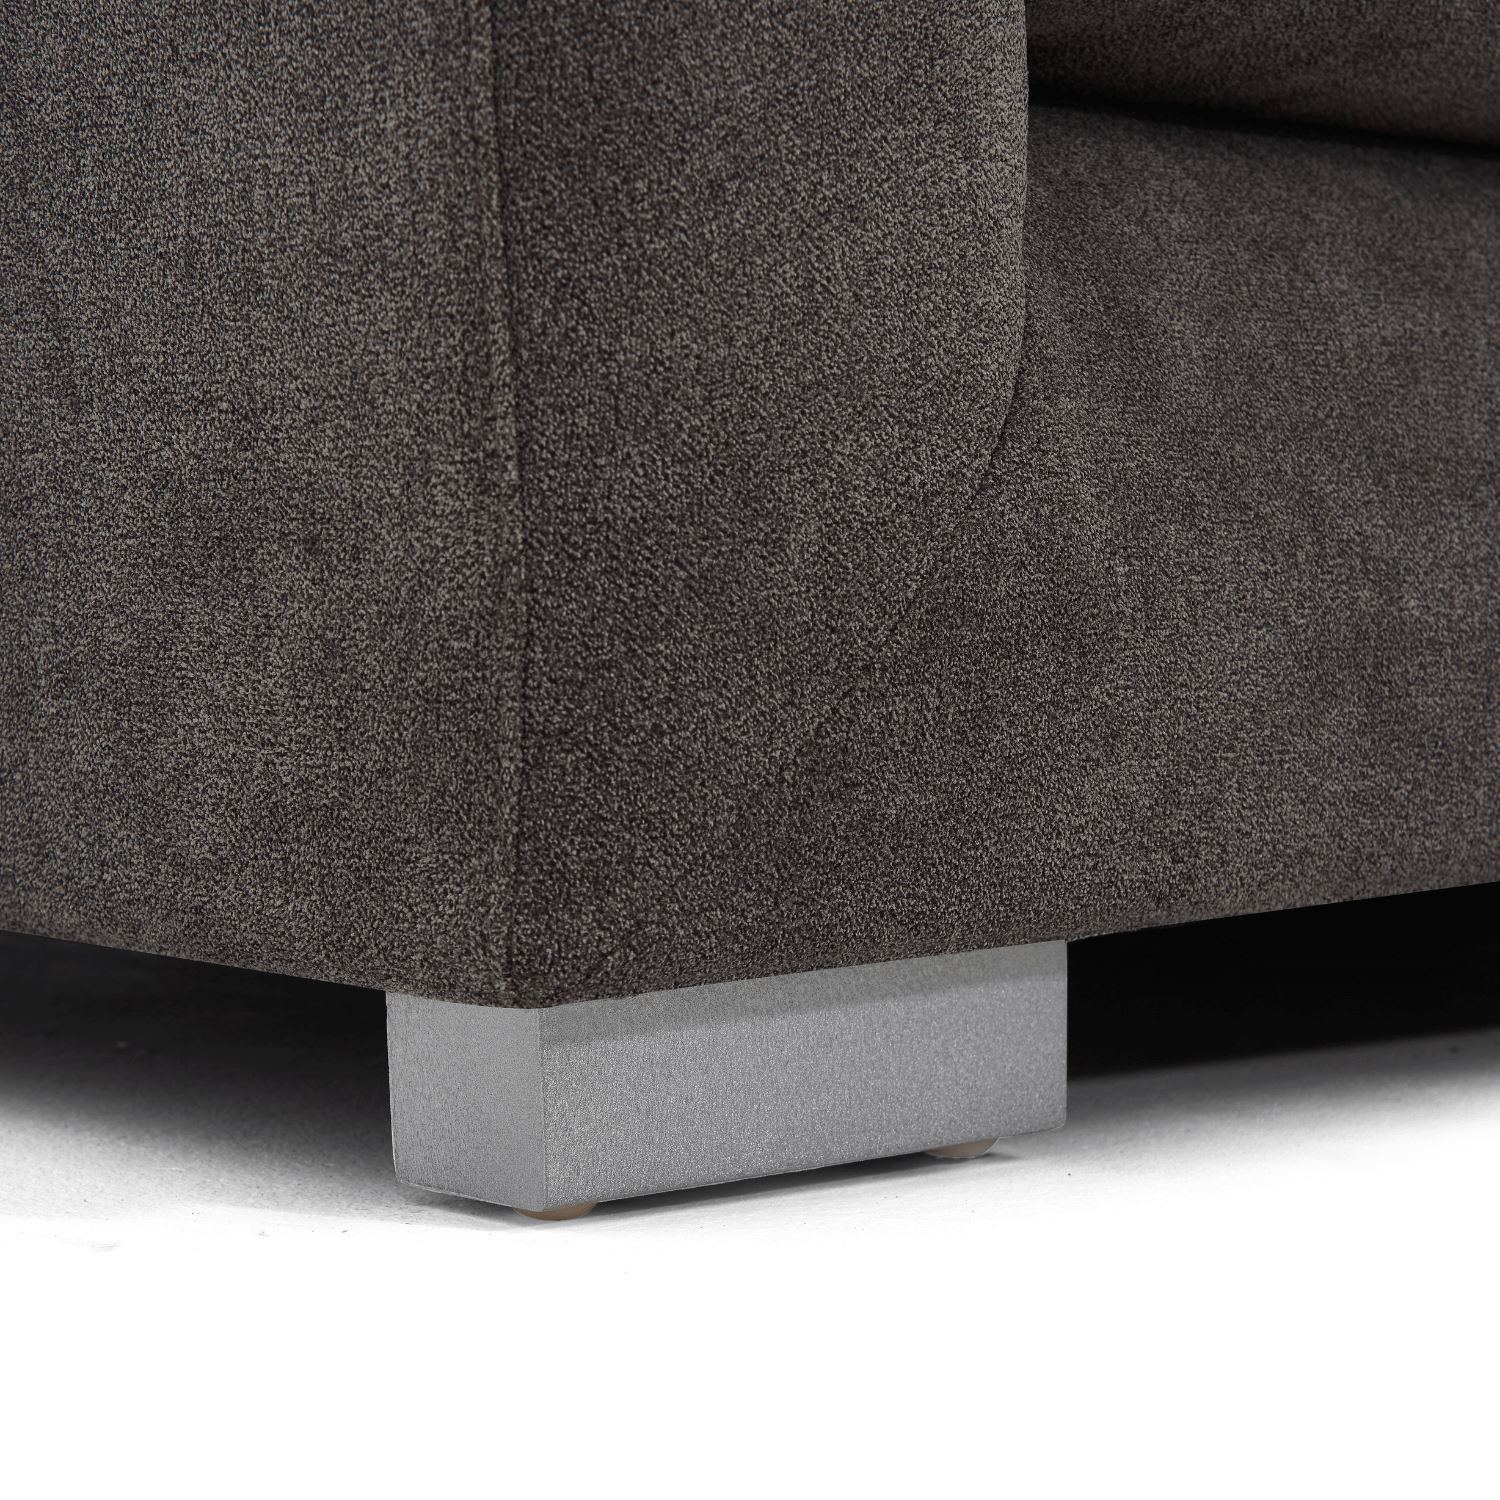  Feathers Sectional Sofa Mario Capasa Grey 170 inch Facing Right